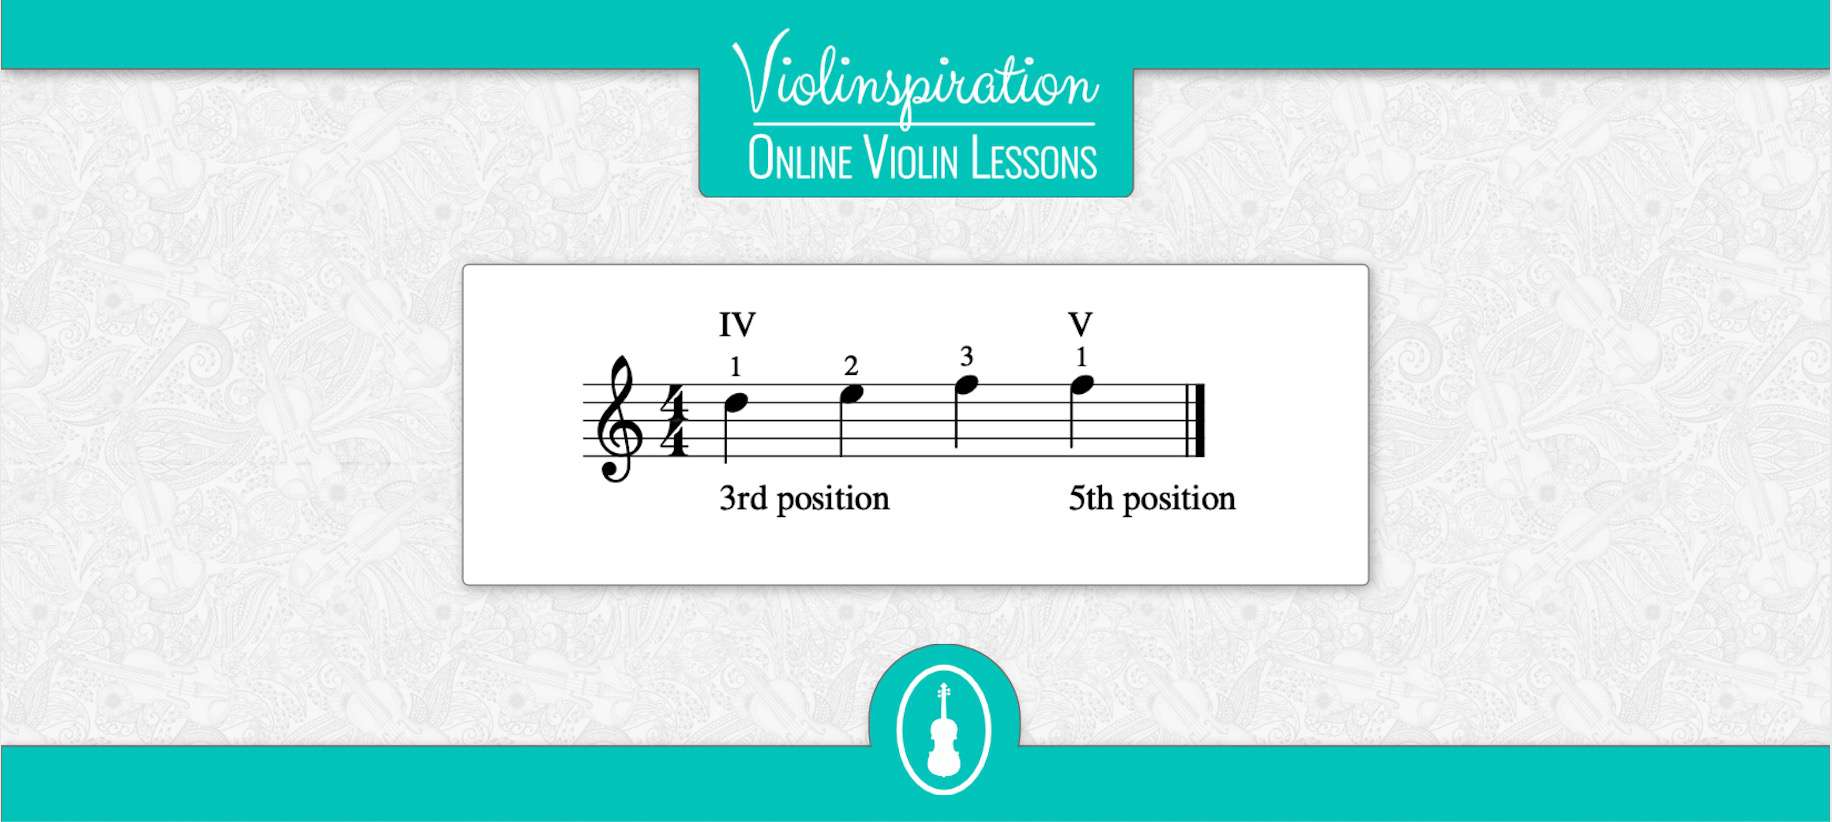 Violin Positions - Find Fifth Position Violin